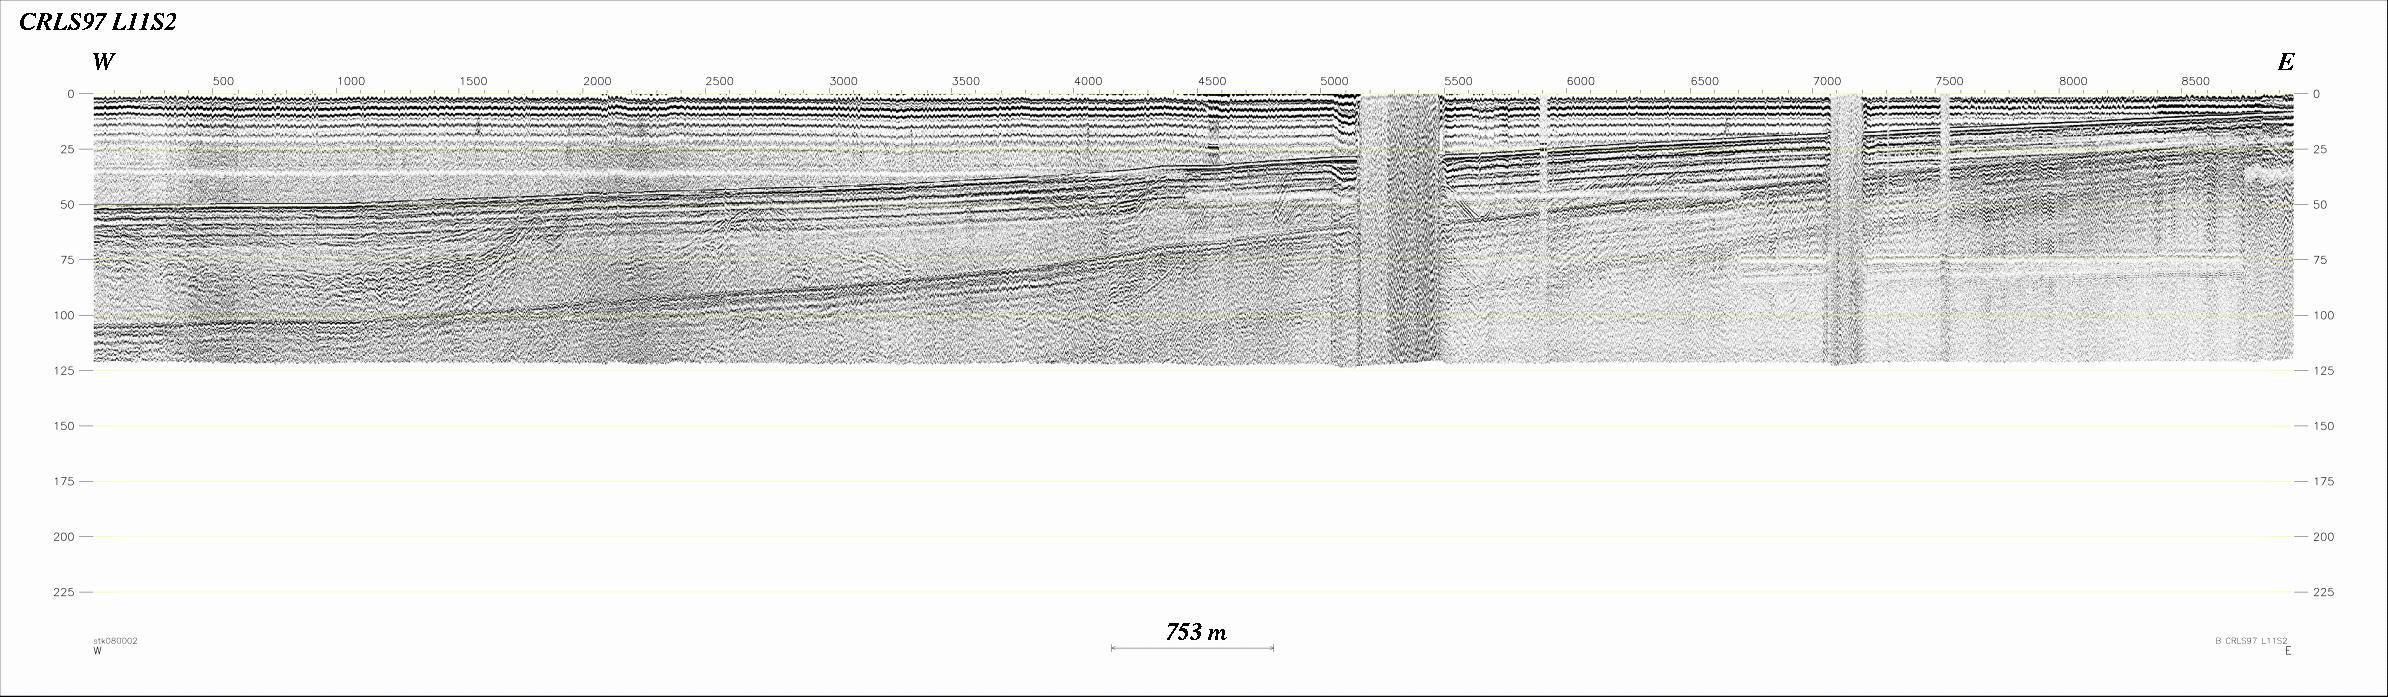 Seismic Reflection Profile Line No.: L11s2 (301562 bytes)